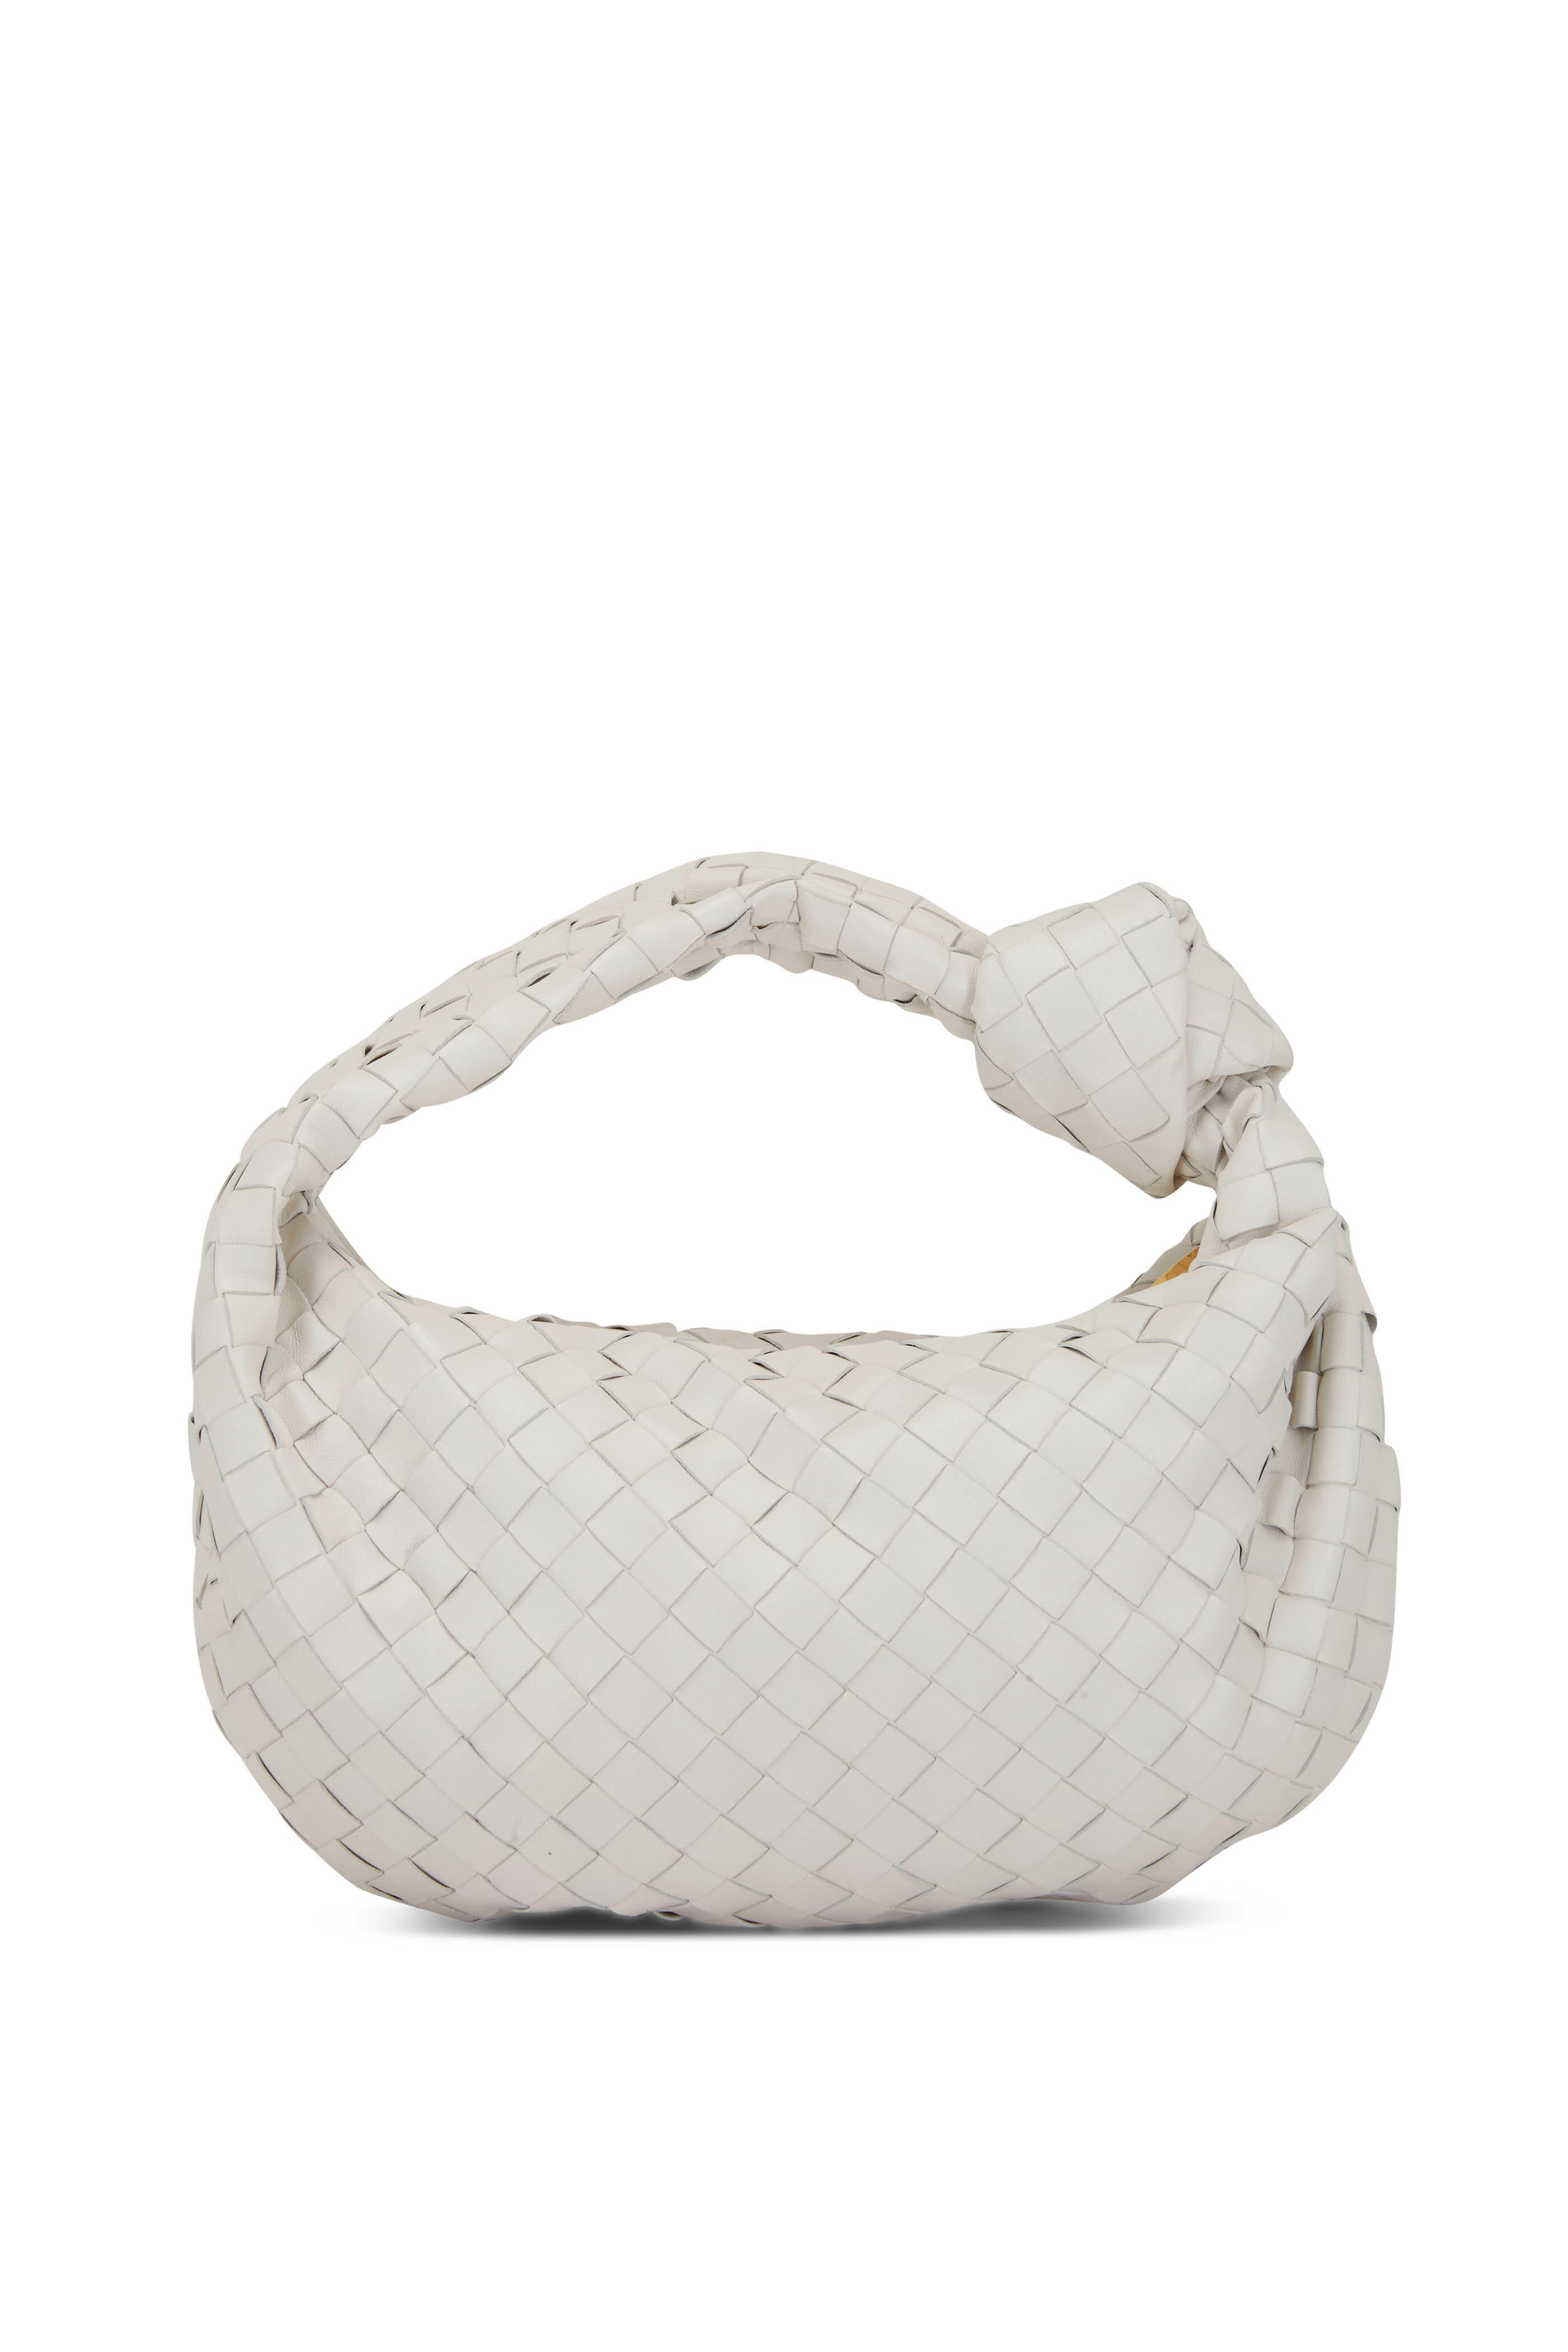 Bottega Veneta Women's Small Jodie Woven Shoulder Bag